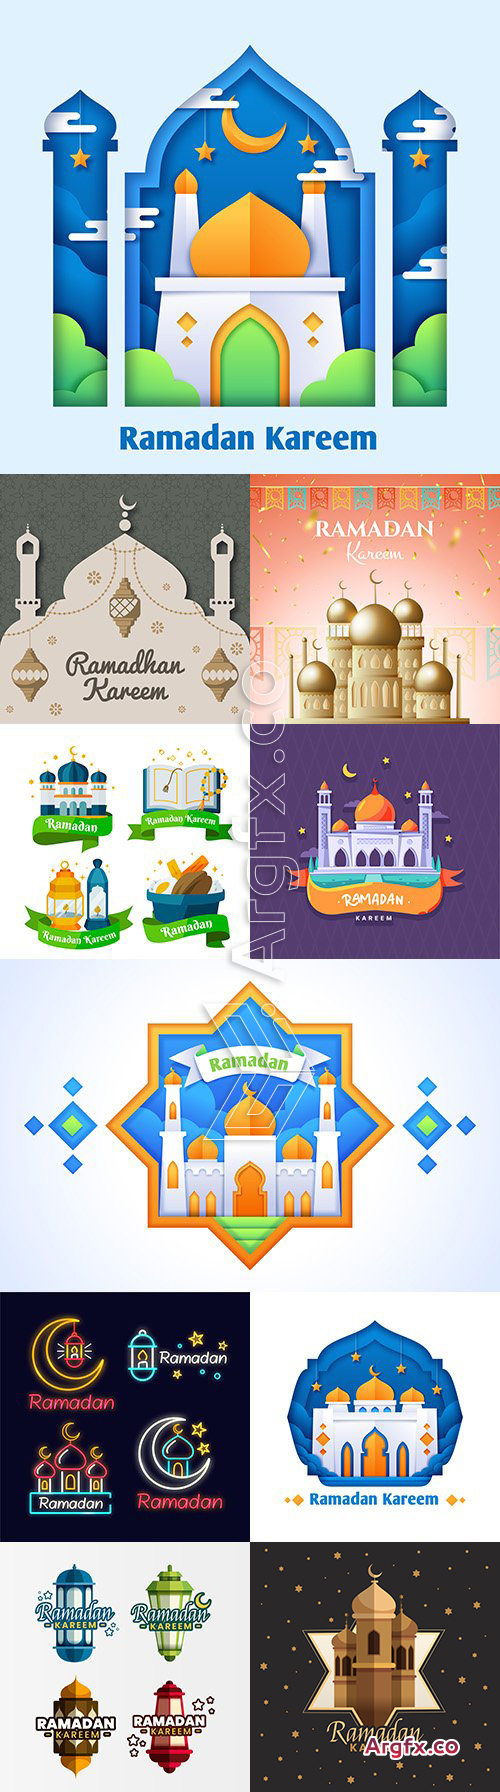 Ramadan Kareem design illustrations in flat style